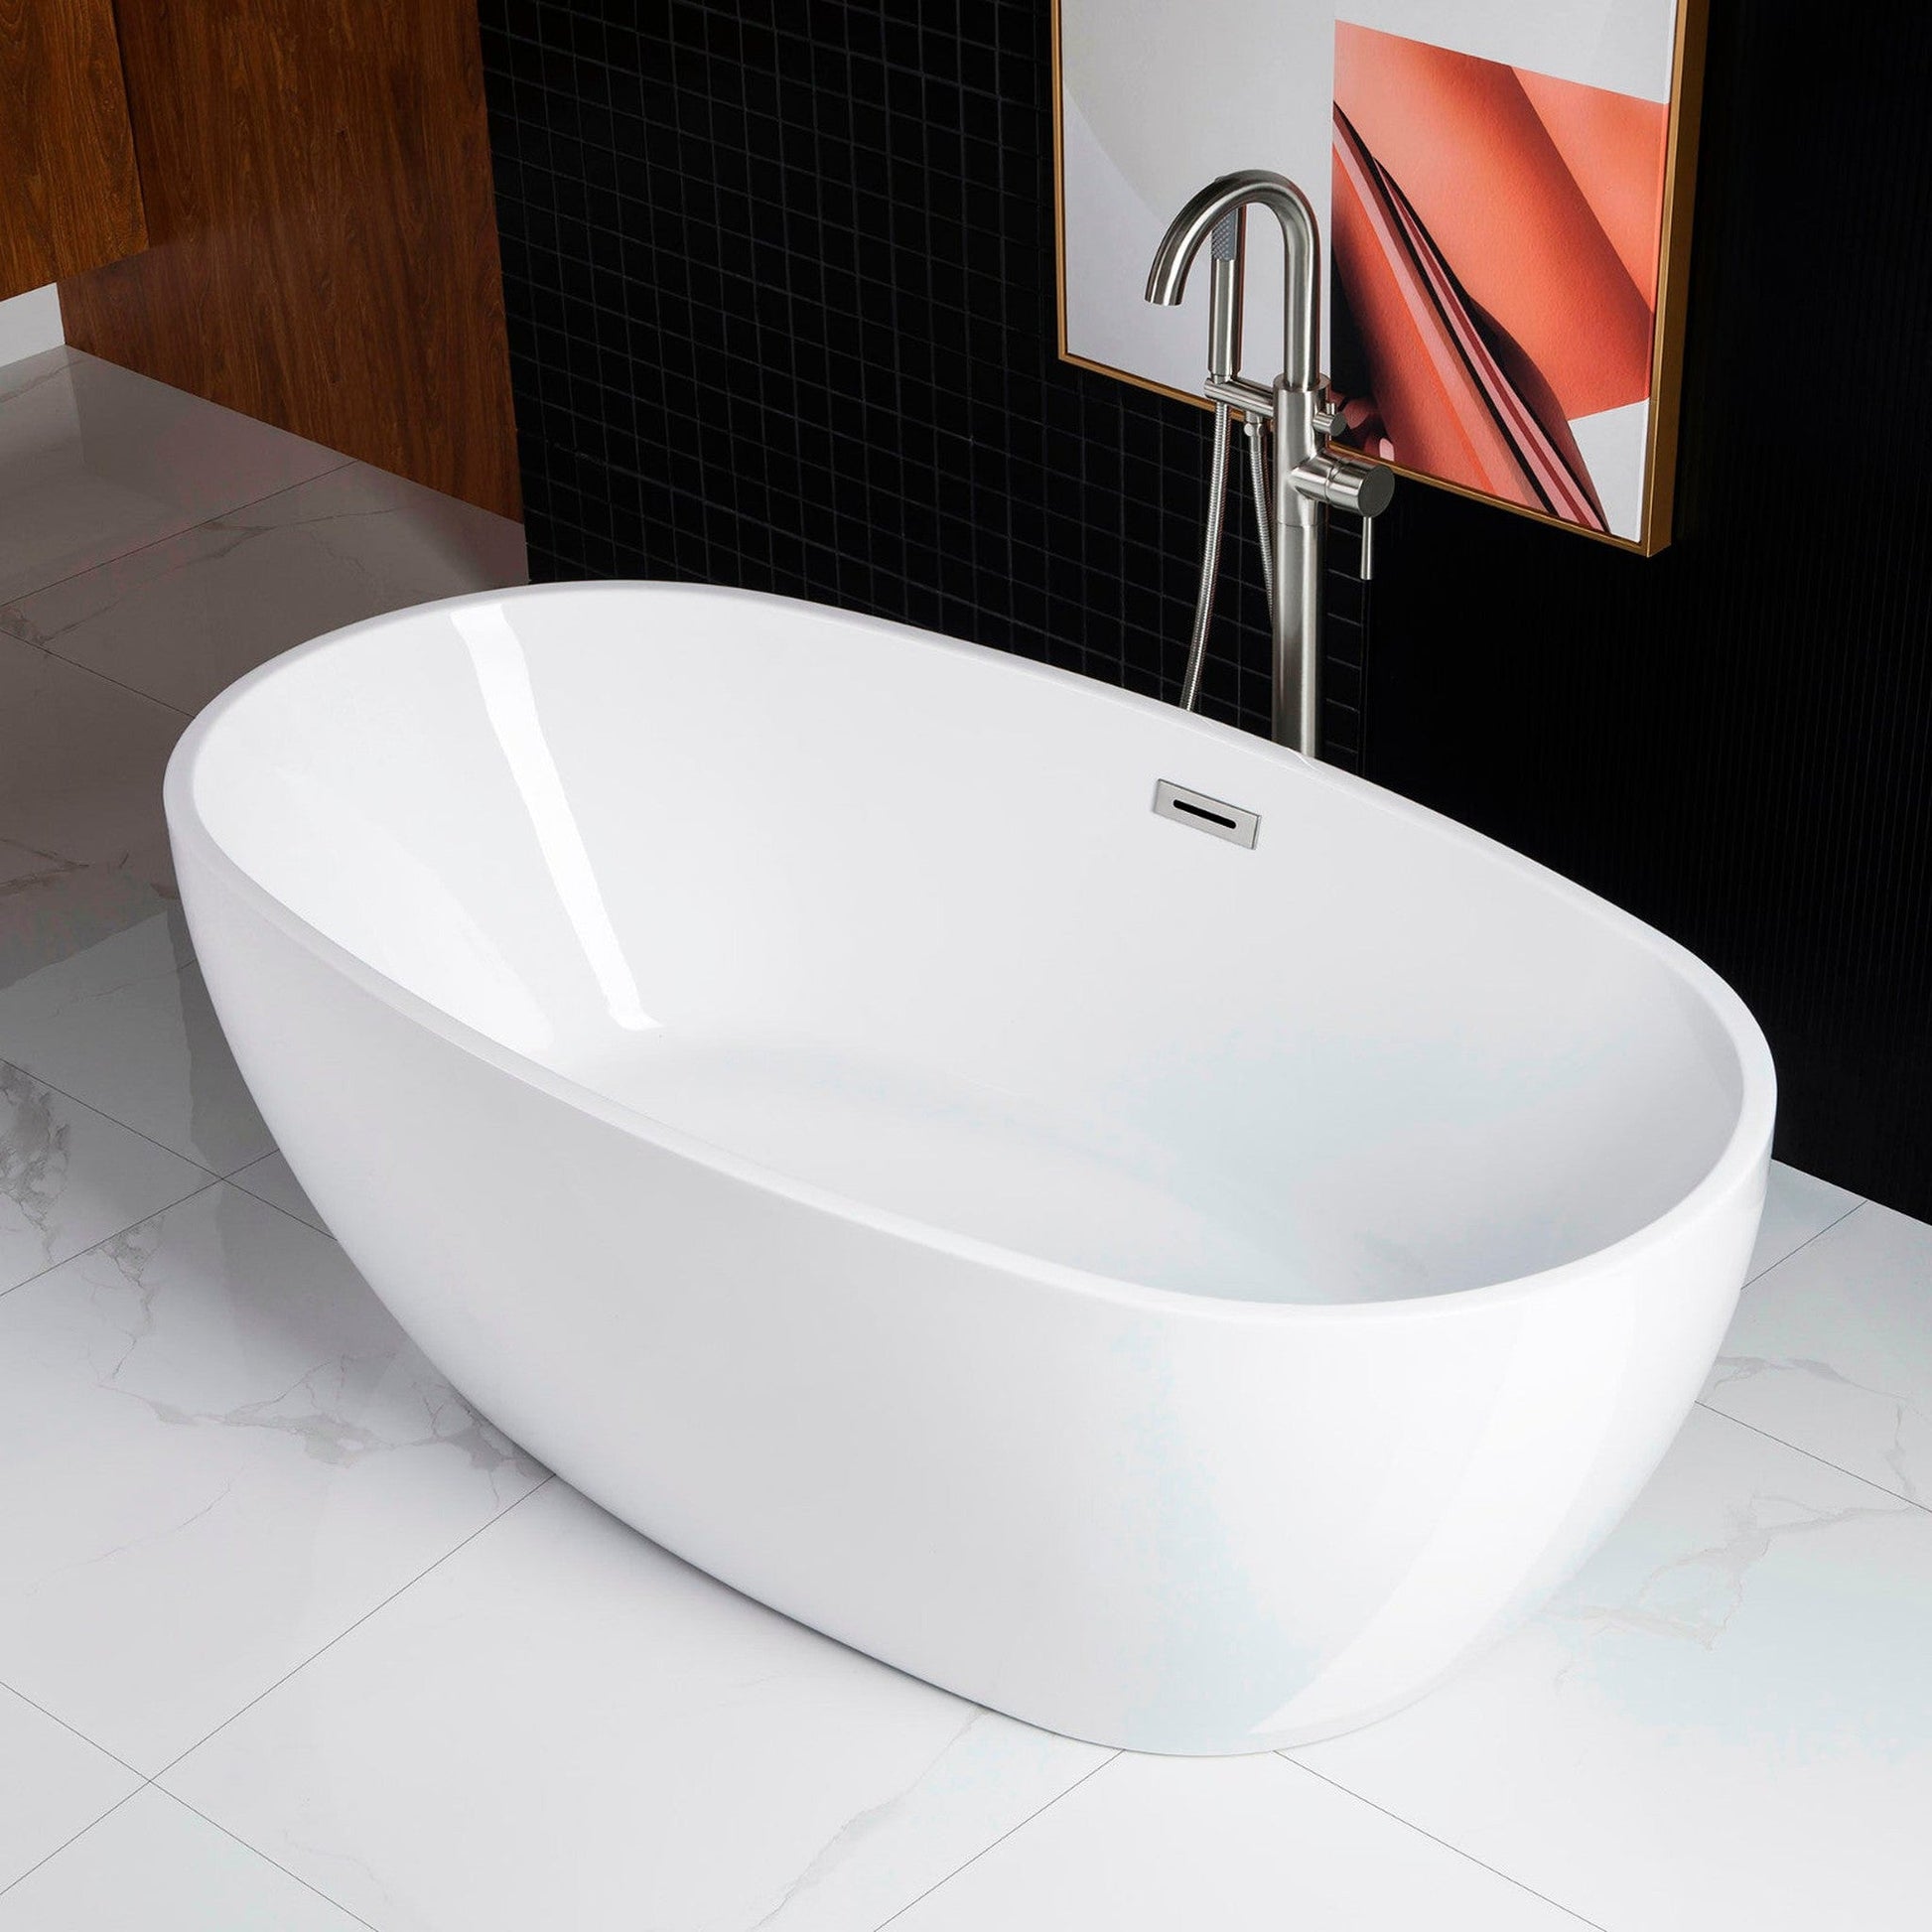 WoodBridge B0028 67" White Acrylic Freestanding Soaking Bathtub With Chrome Drain, Overflow, F0071CHVT Tub Filler and Caddy Tray